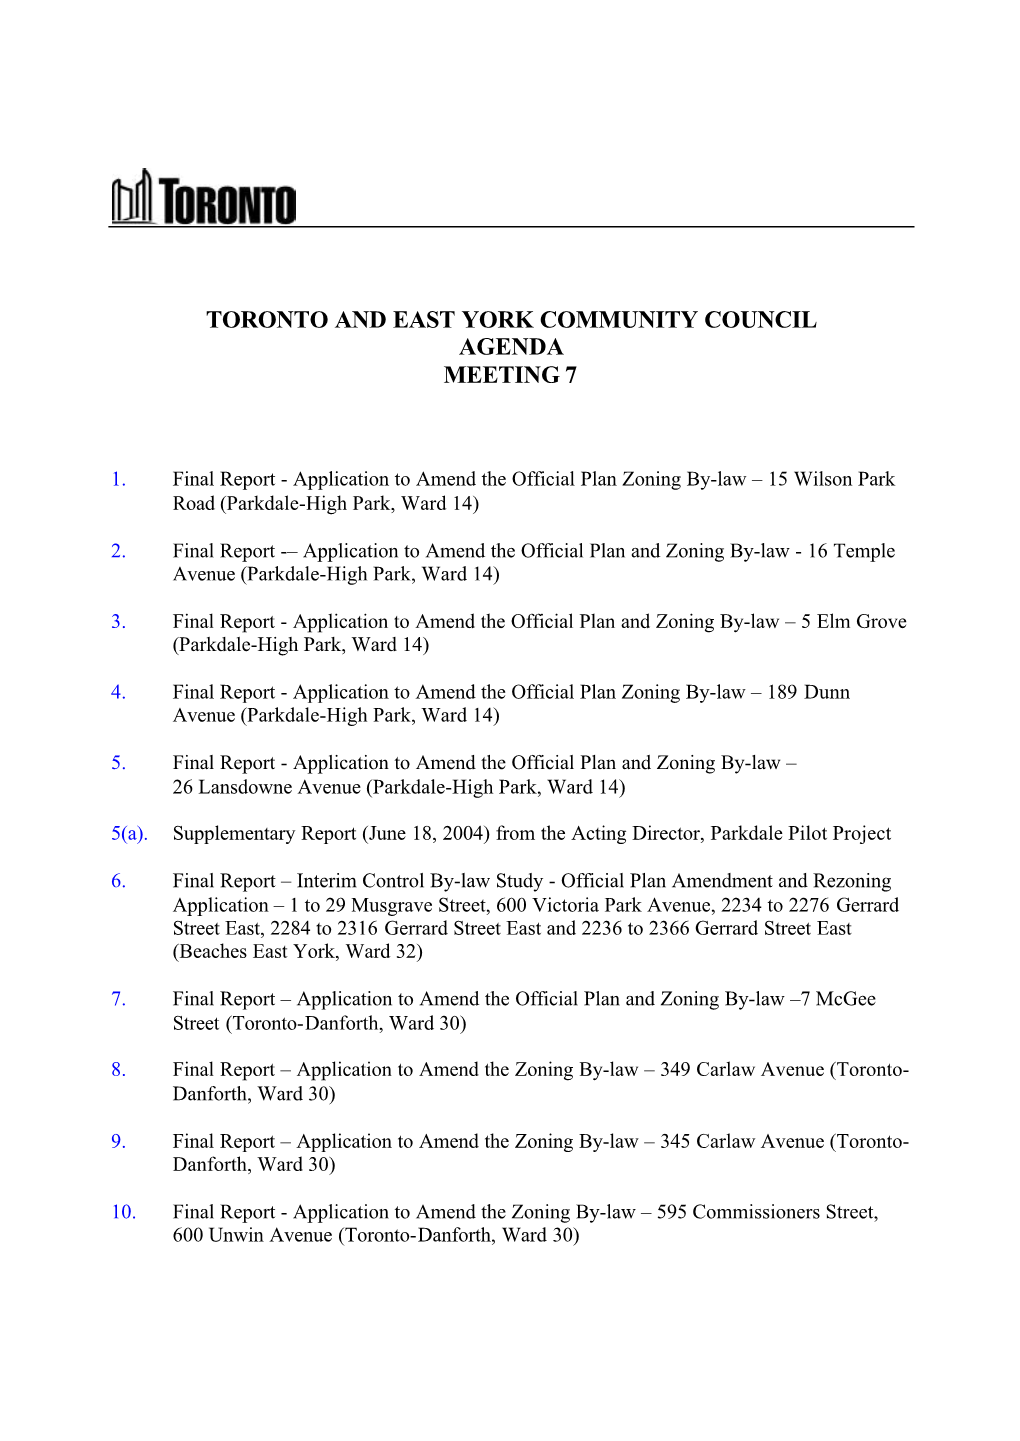 Toronto and East York Community Council Agenda Meeting 7